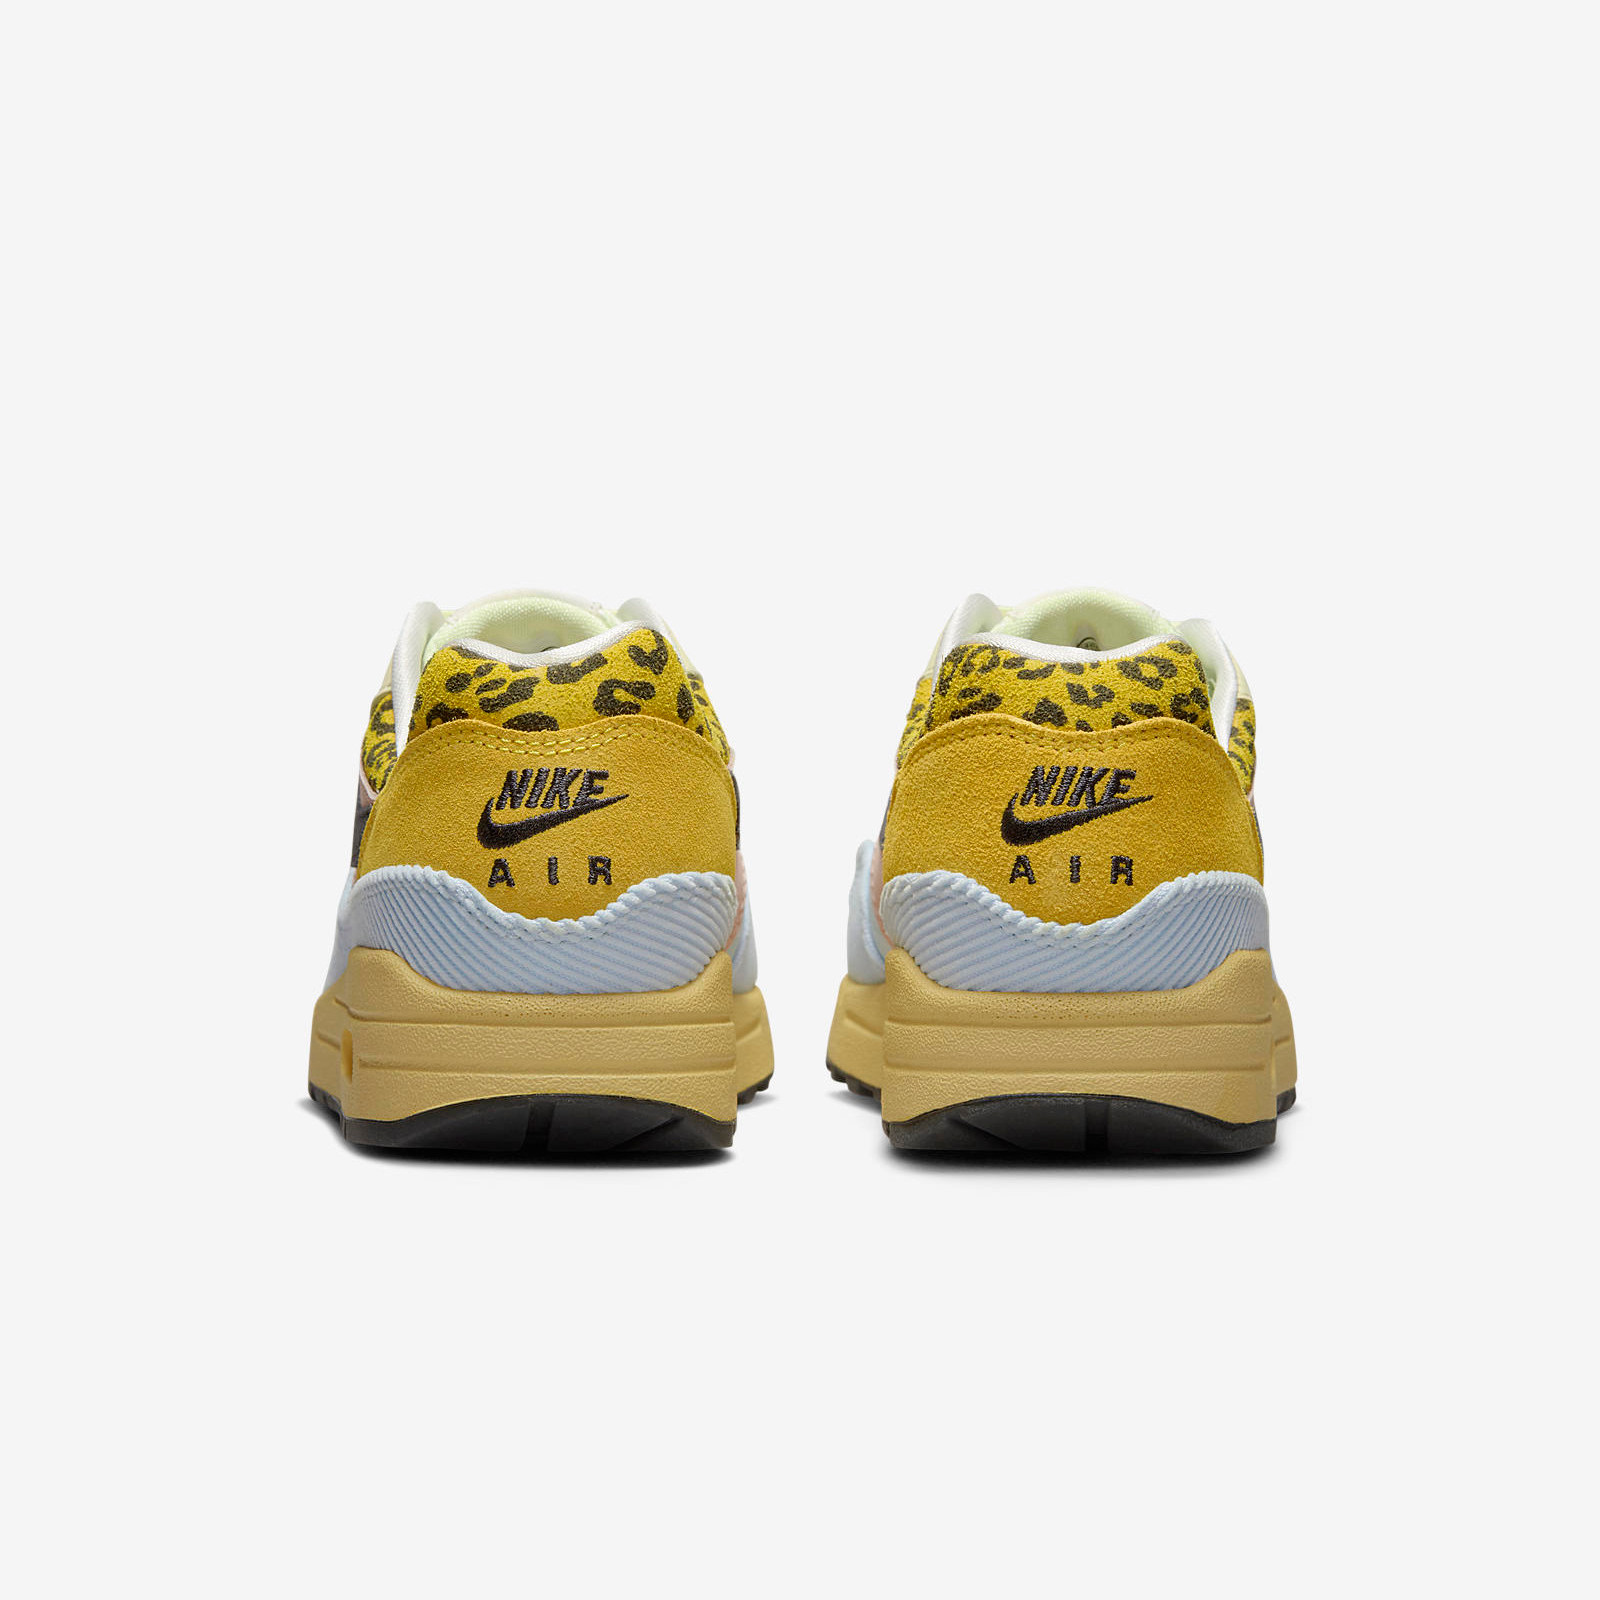 Nike Air Max 1
« Teal Tint »